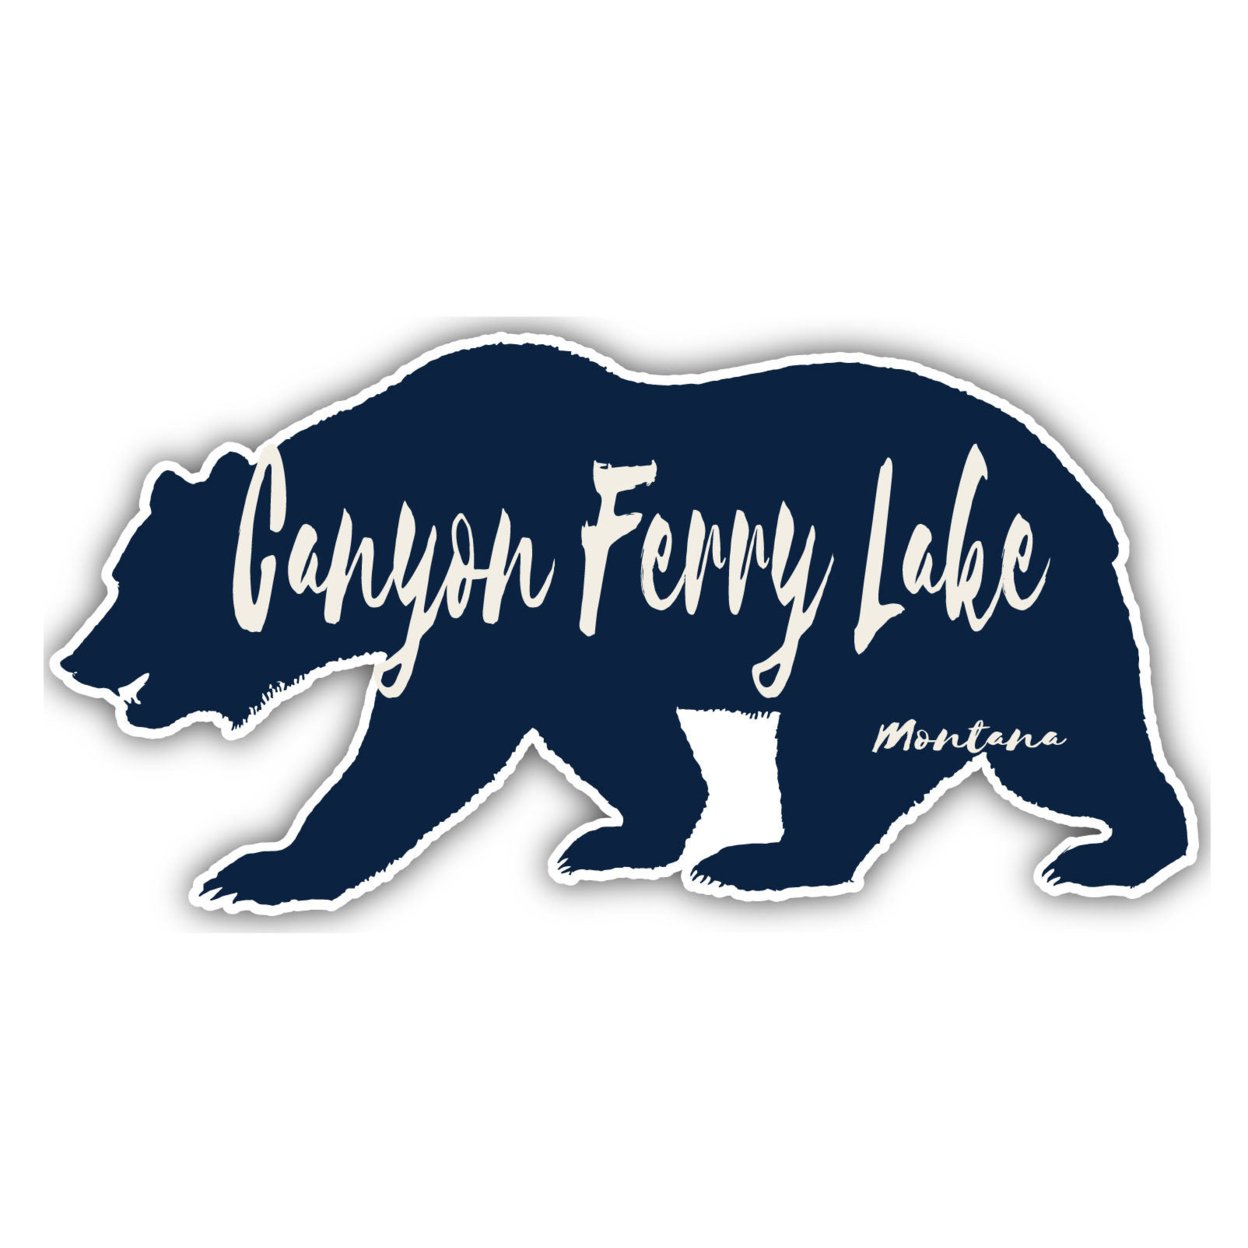 Canyon Ferry Lake Montana Souvenir Decorative Stickers (Choose Theme And Size) - 4-Pack, 10-Inch, Bear